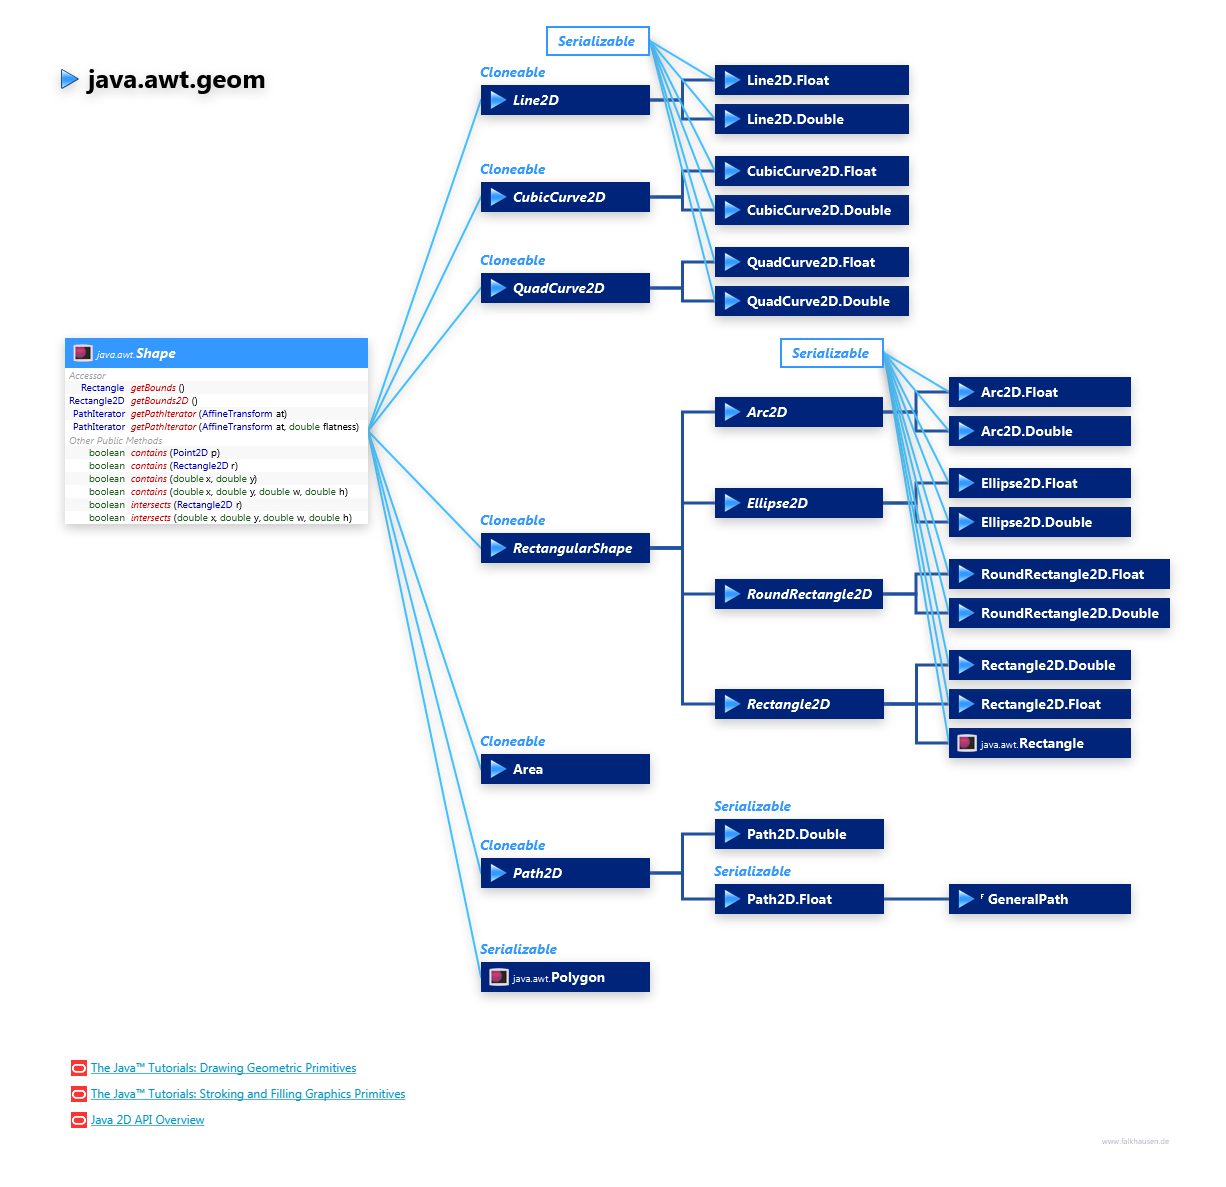 java.awt.geom Shape Hierarchy class diagram and api documentation for Java 7